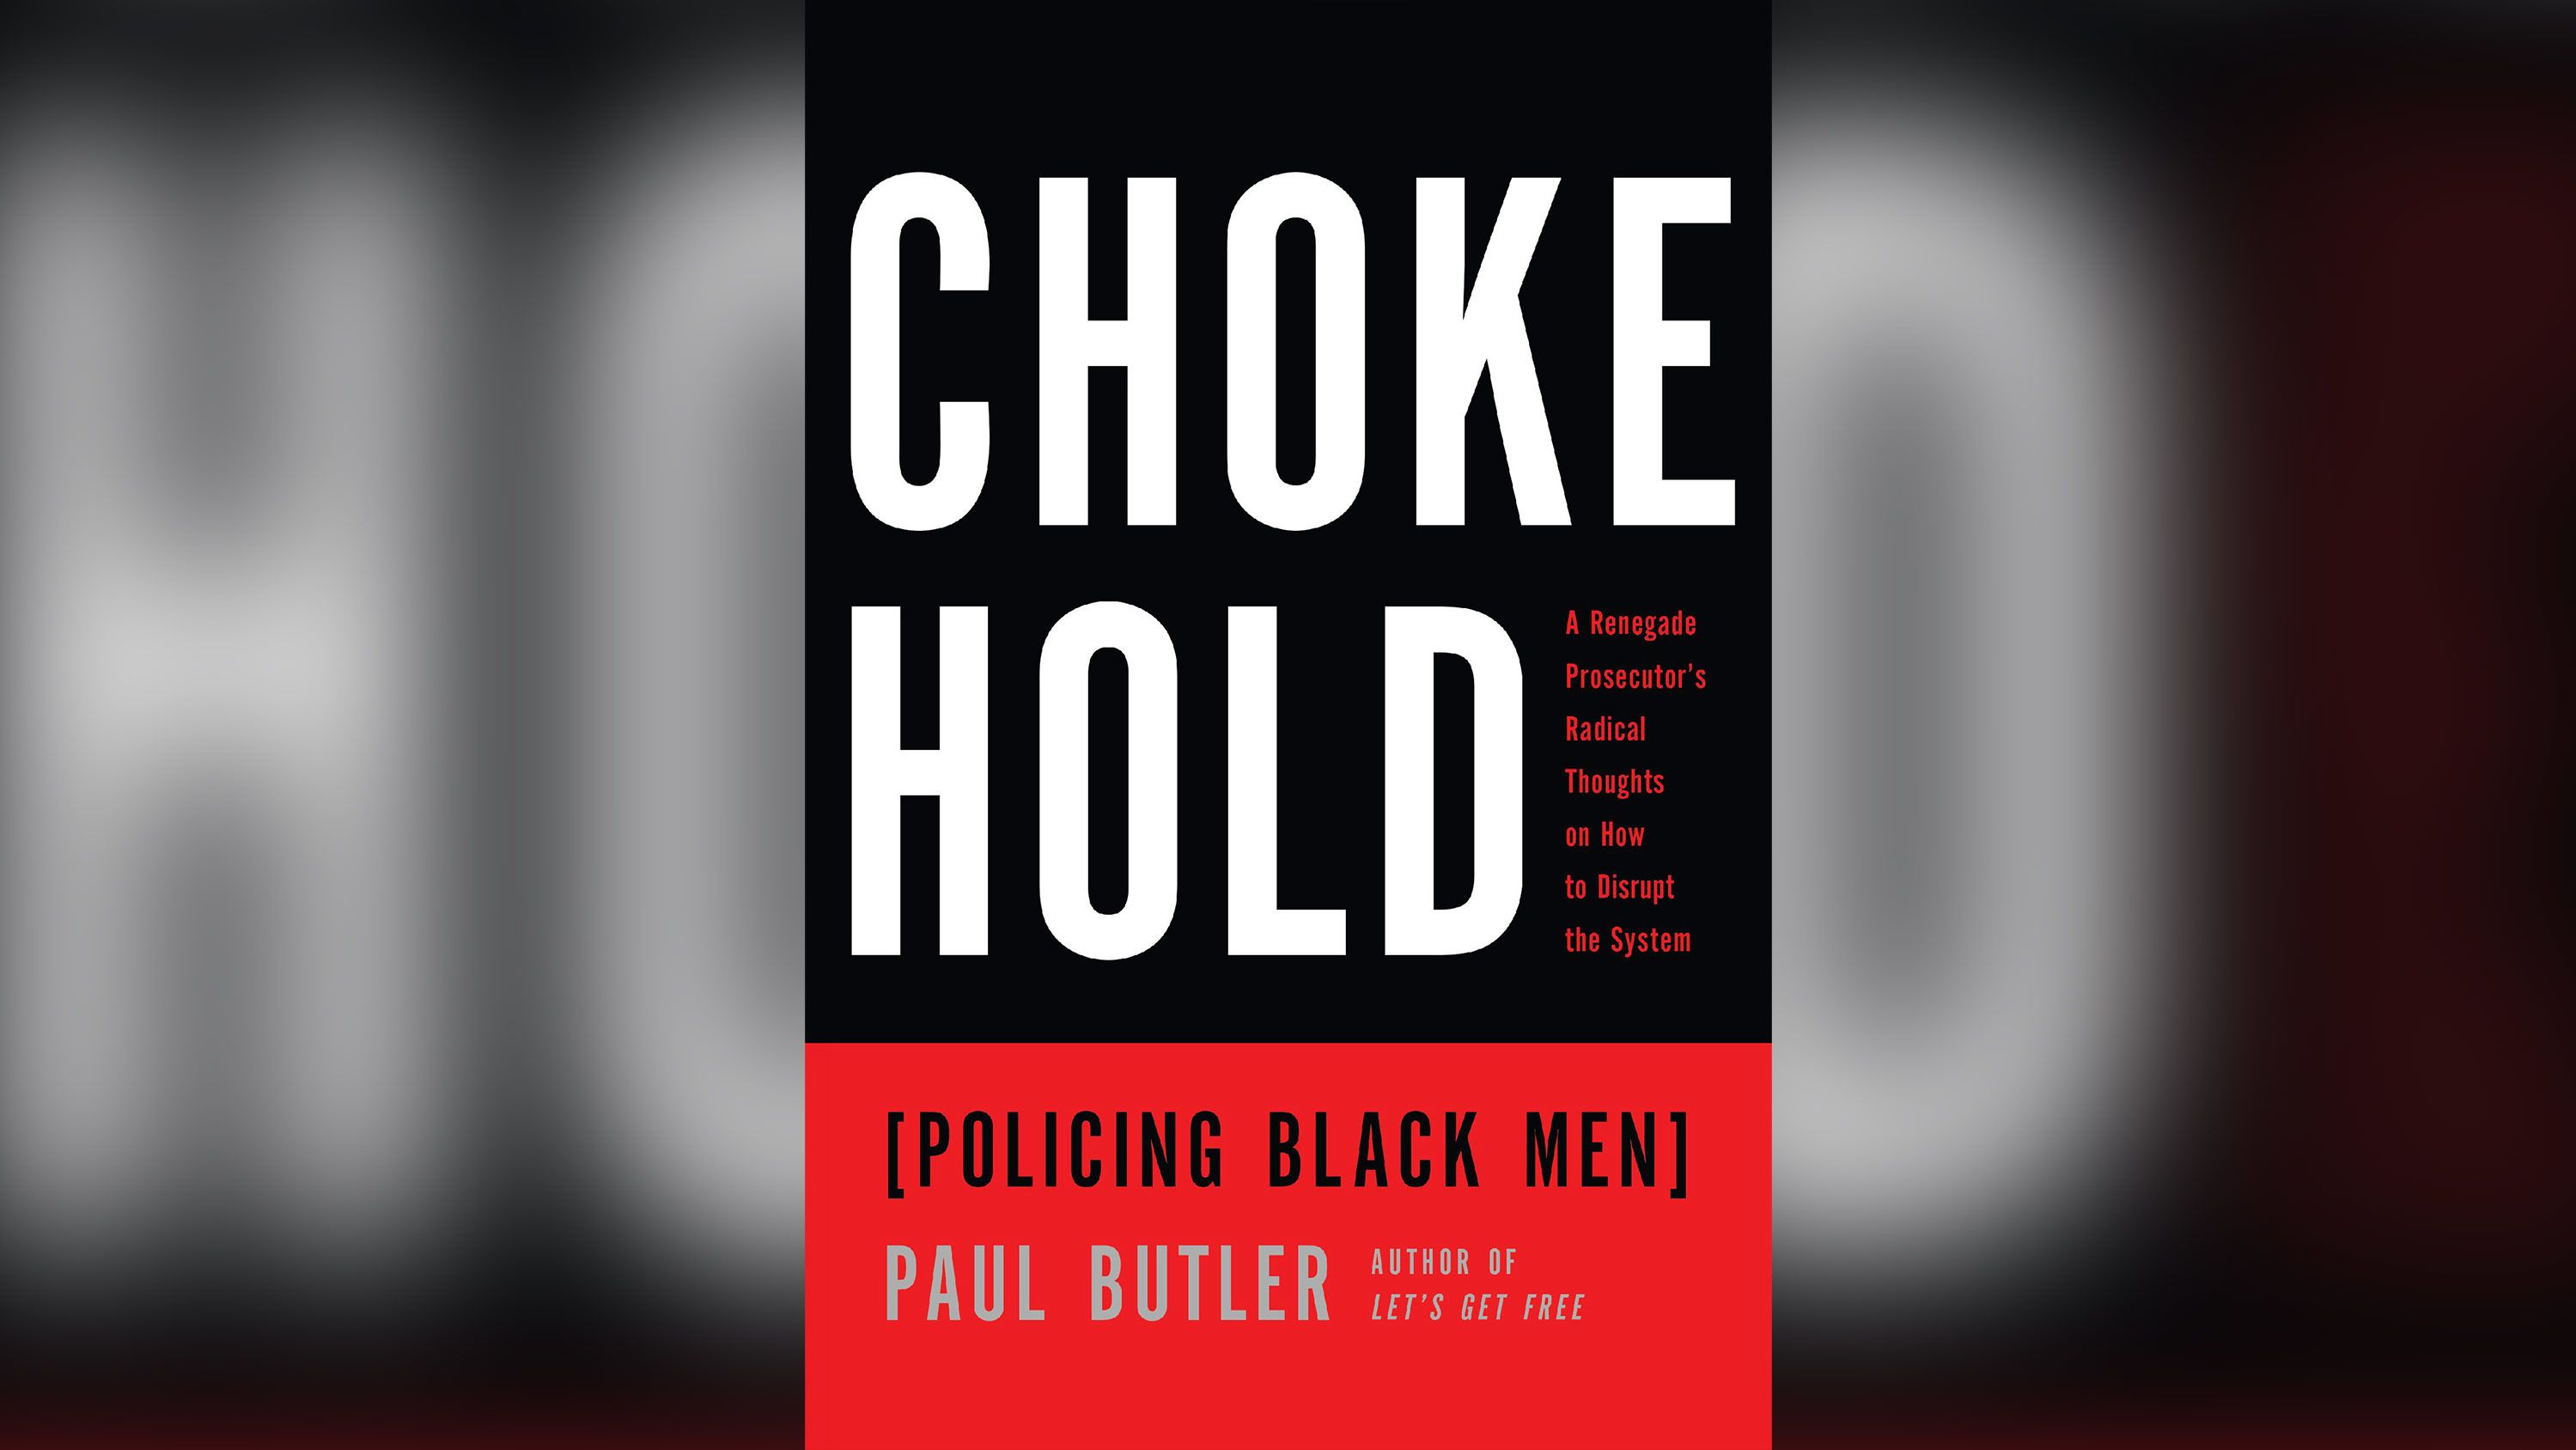 chokehold book cover paul butler